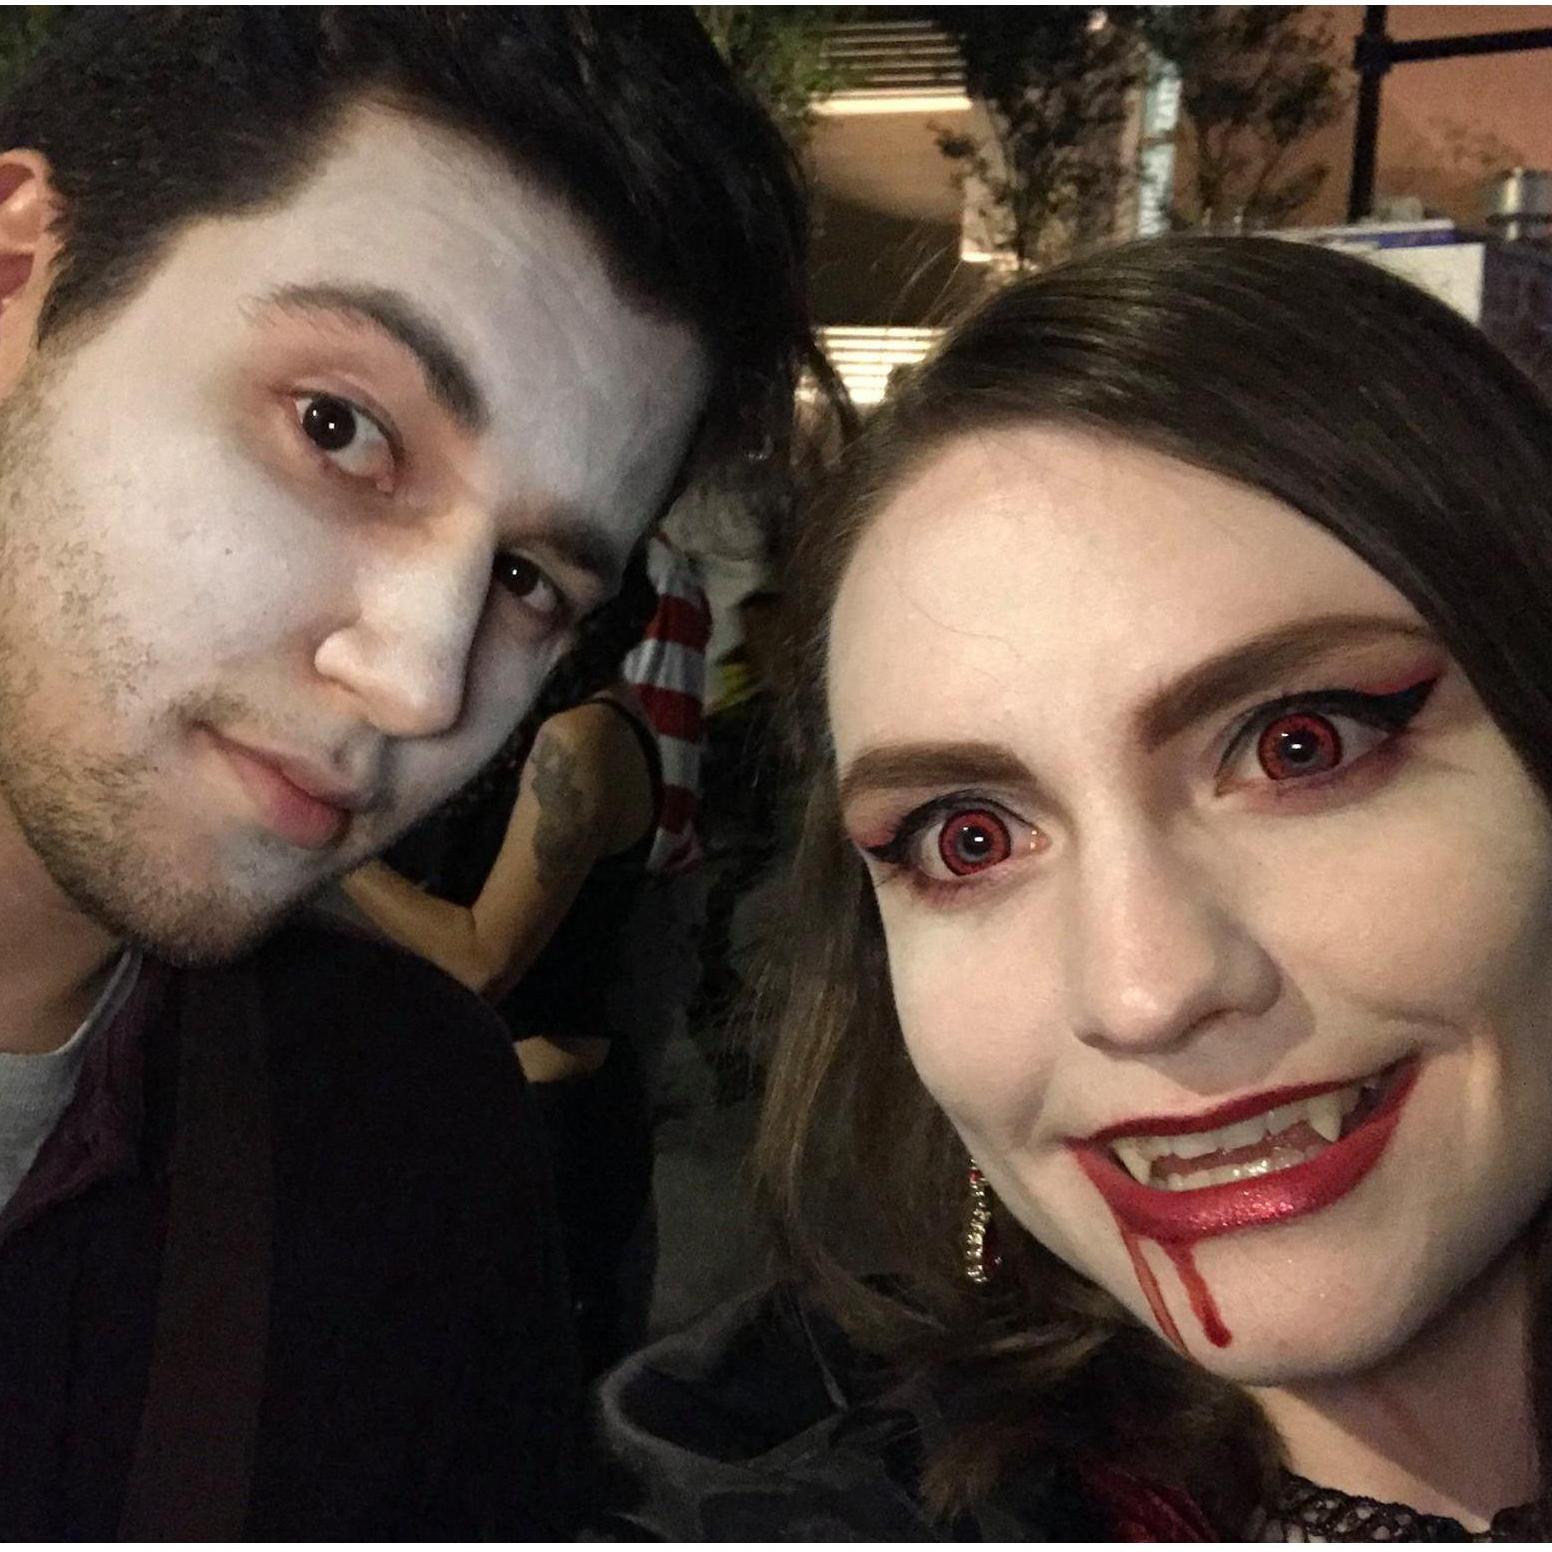 Vampire and victim, October 2017.